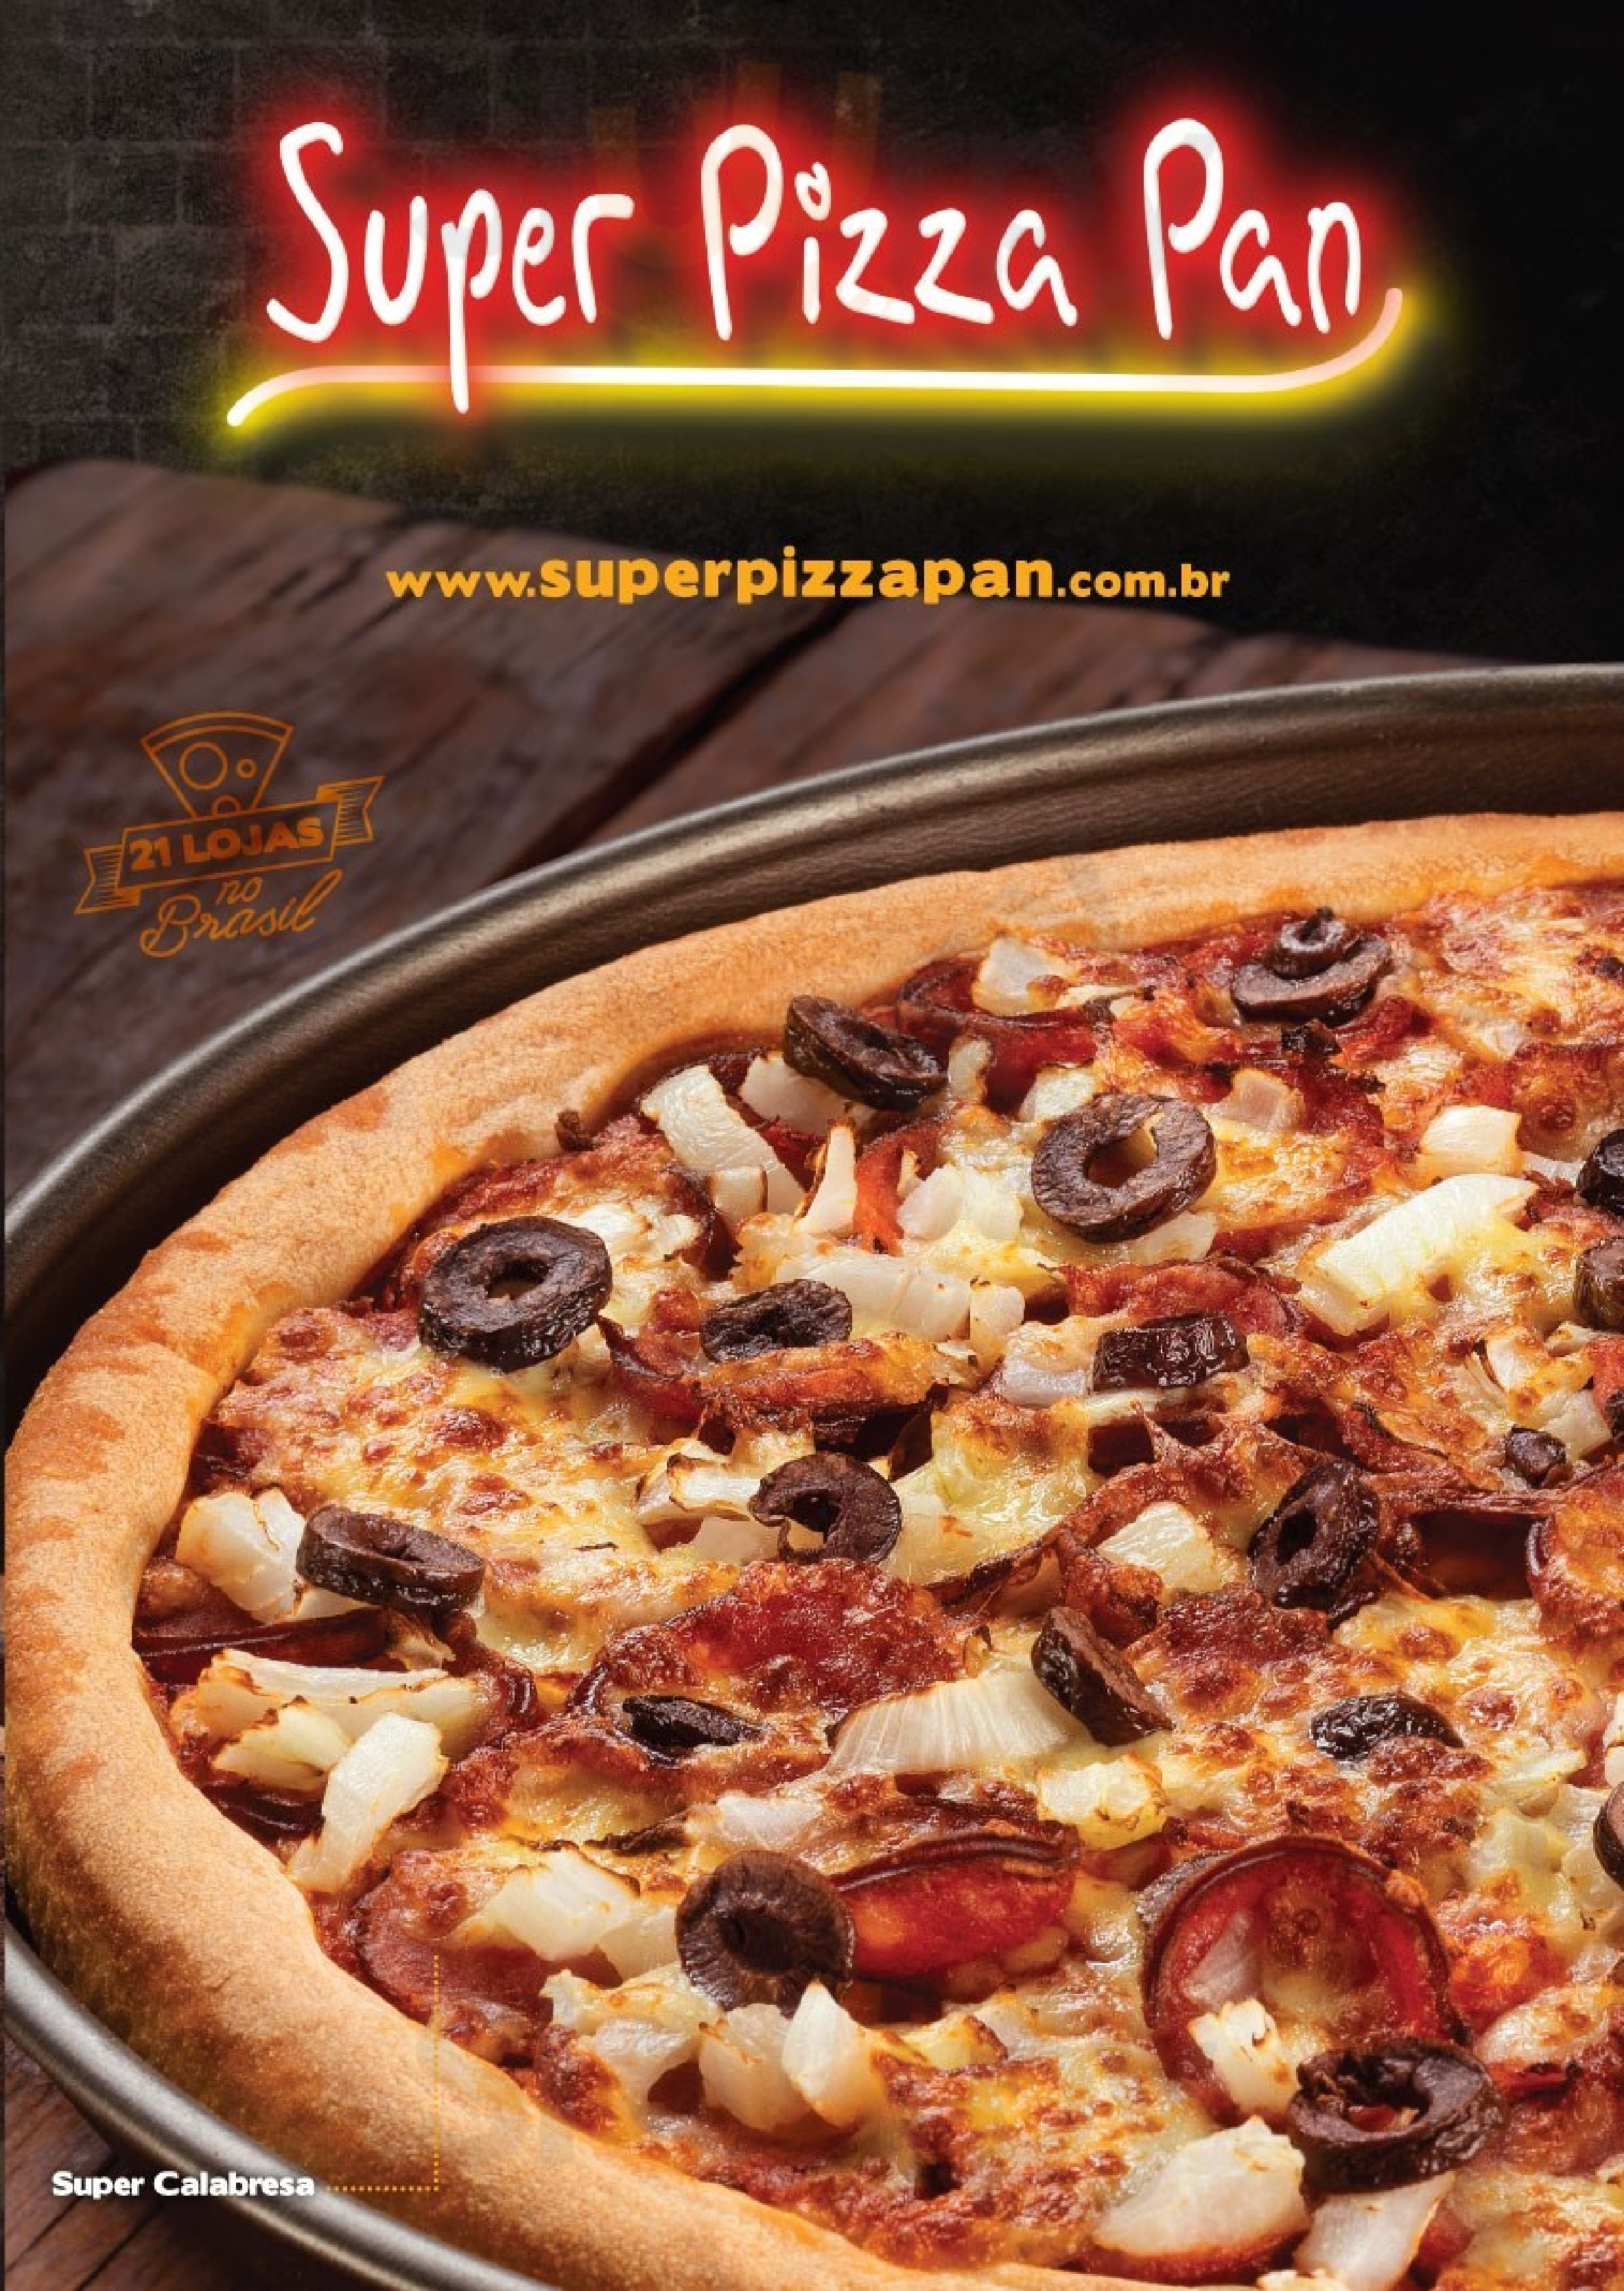 Super Pizza Pan - Mogi Das Cruzes Mogi das Cruzes Menu - 1